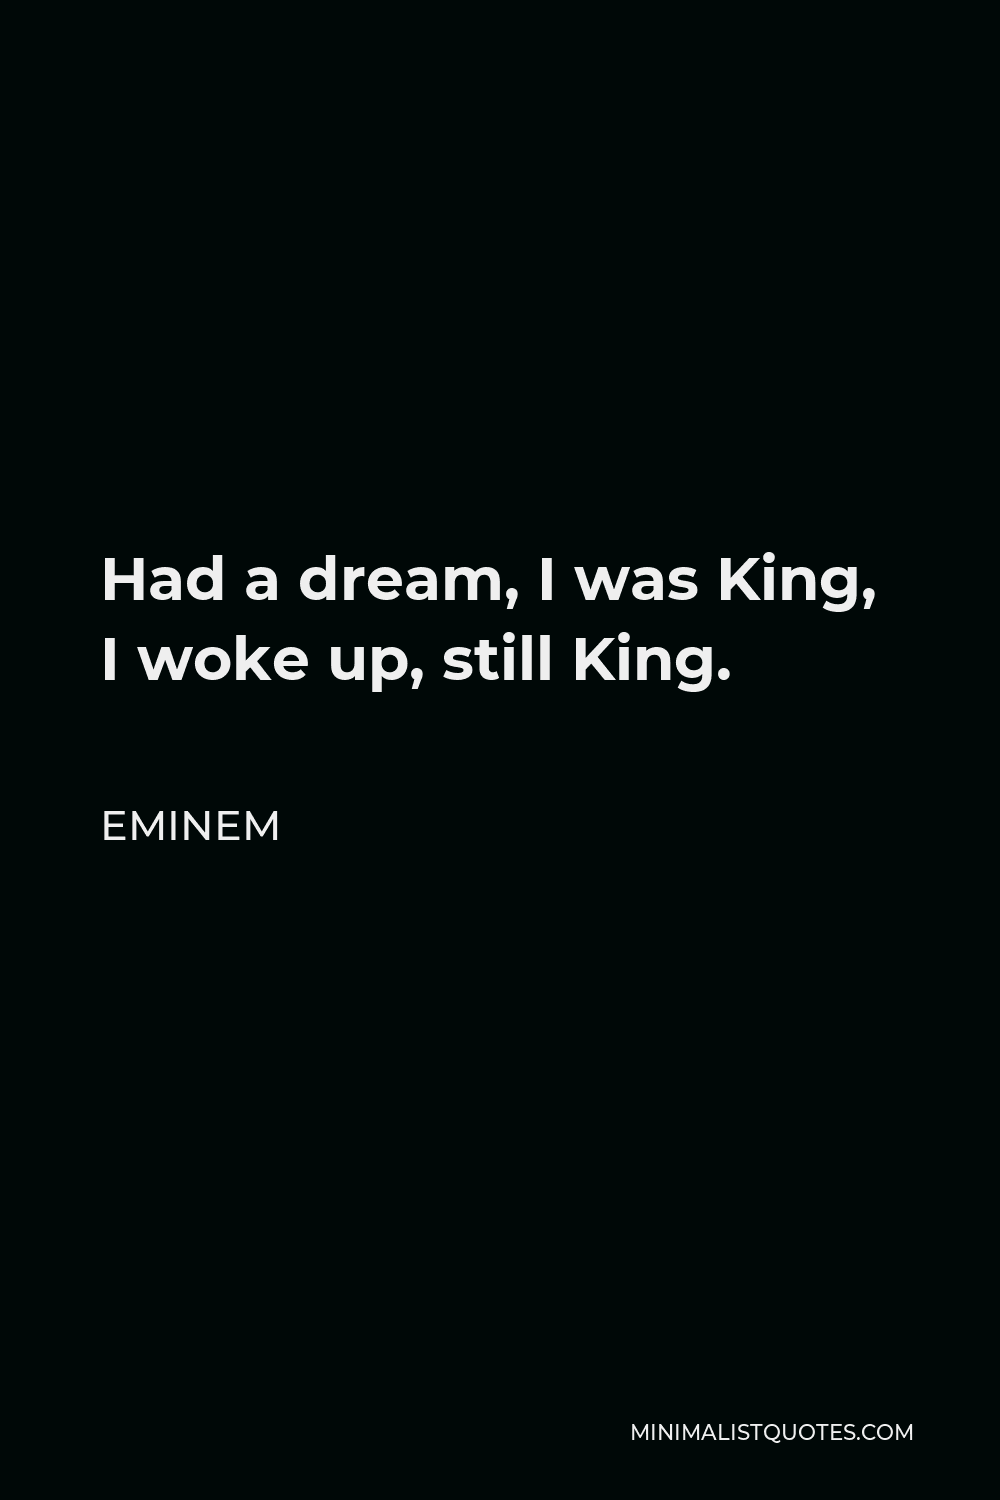 Eminem Quote Had a dream, I was King, I woke up, still King.